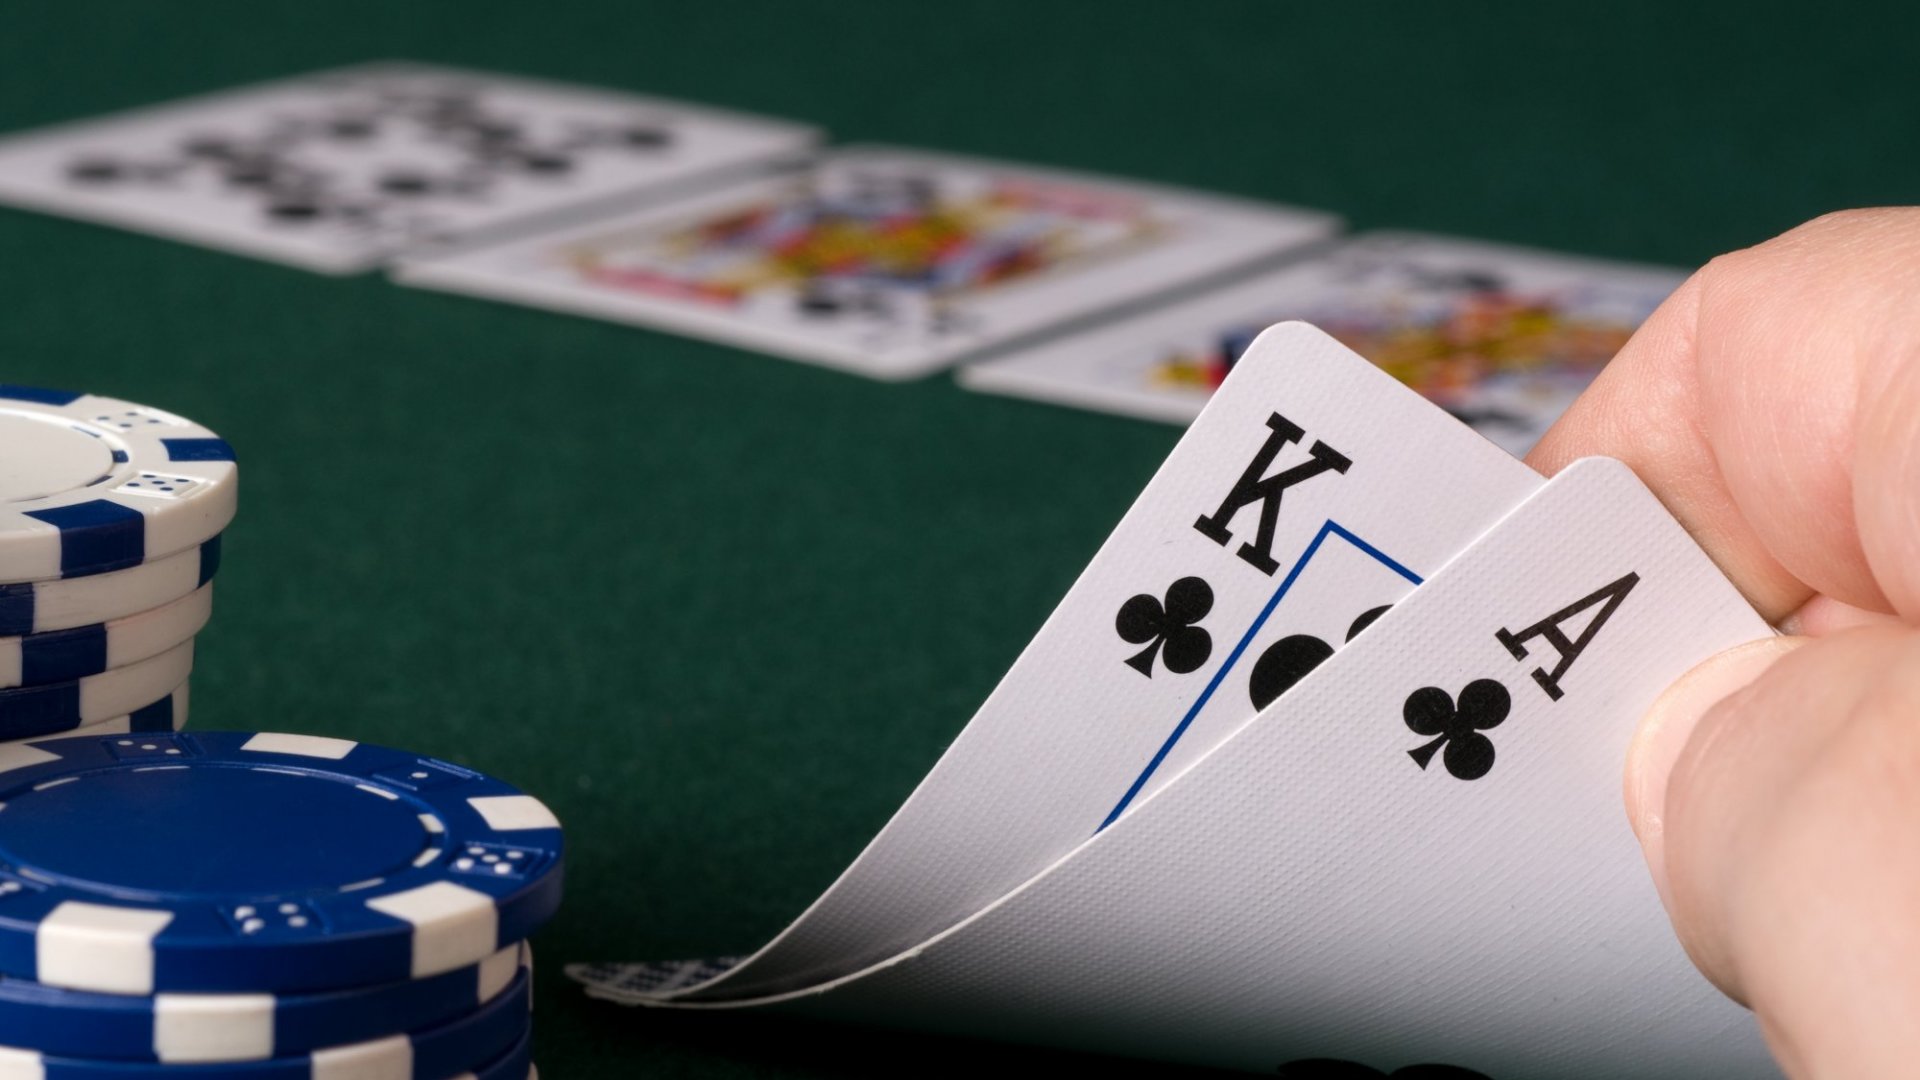 TVBet 为波兰的 iGaming 市场提供新的现场扑克选项